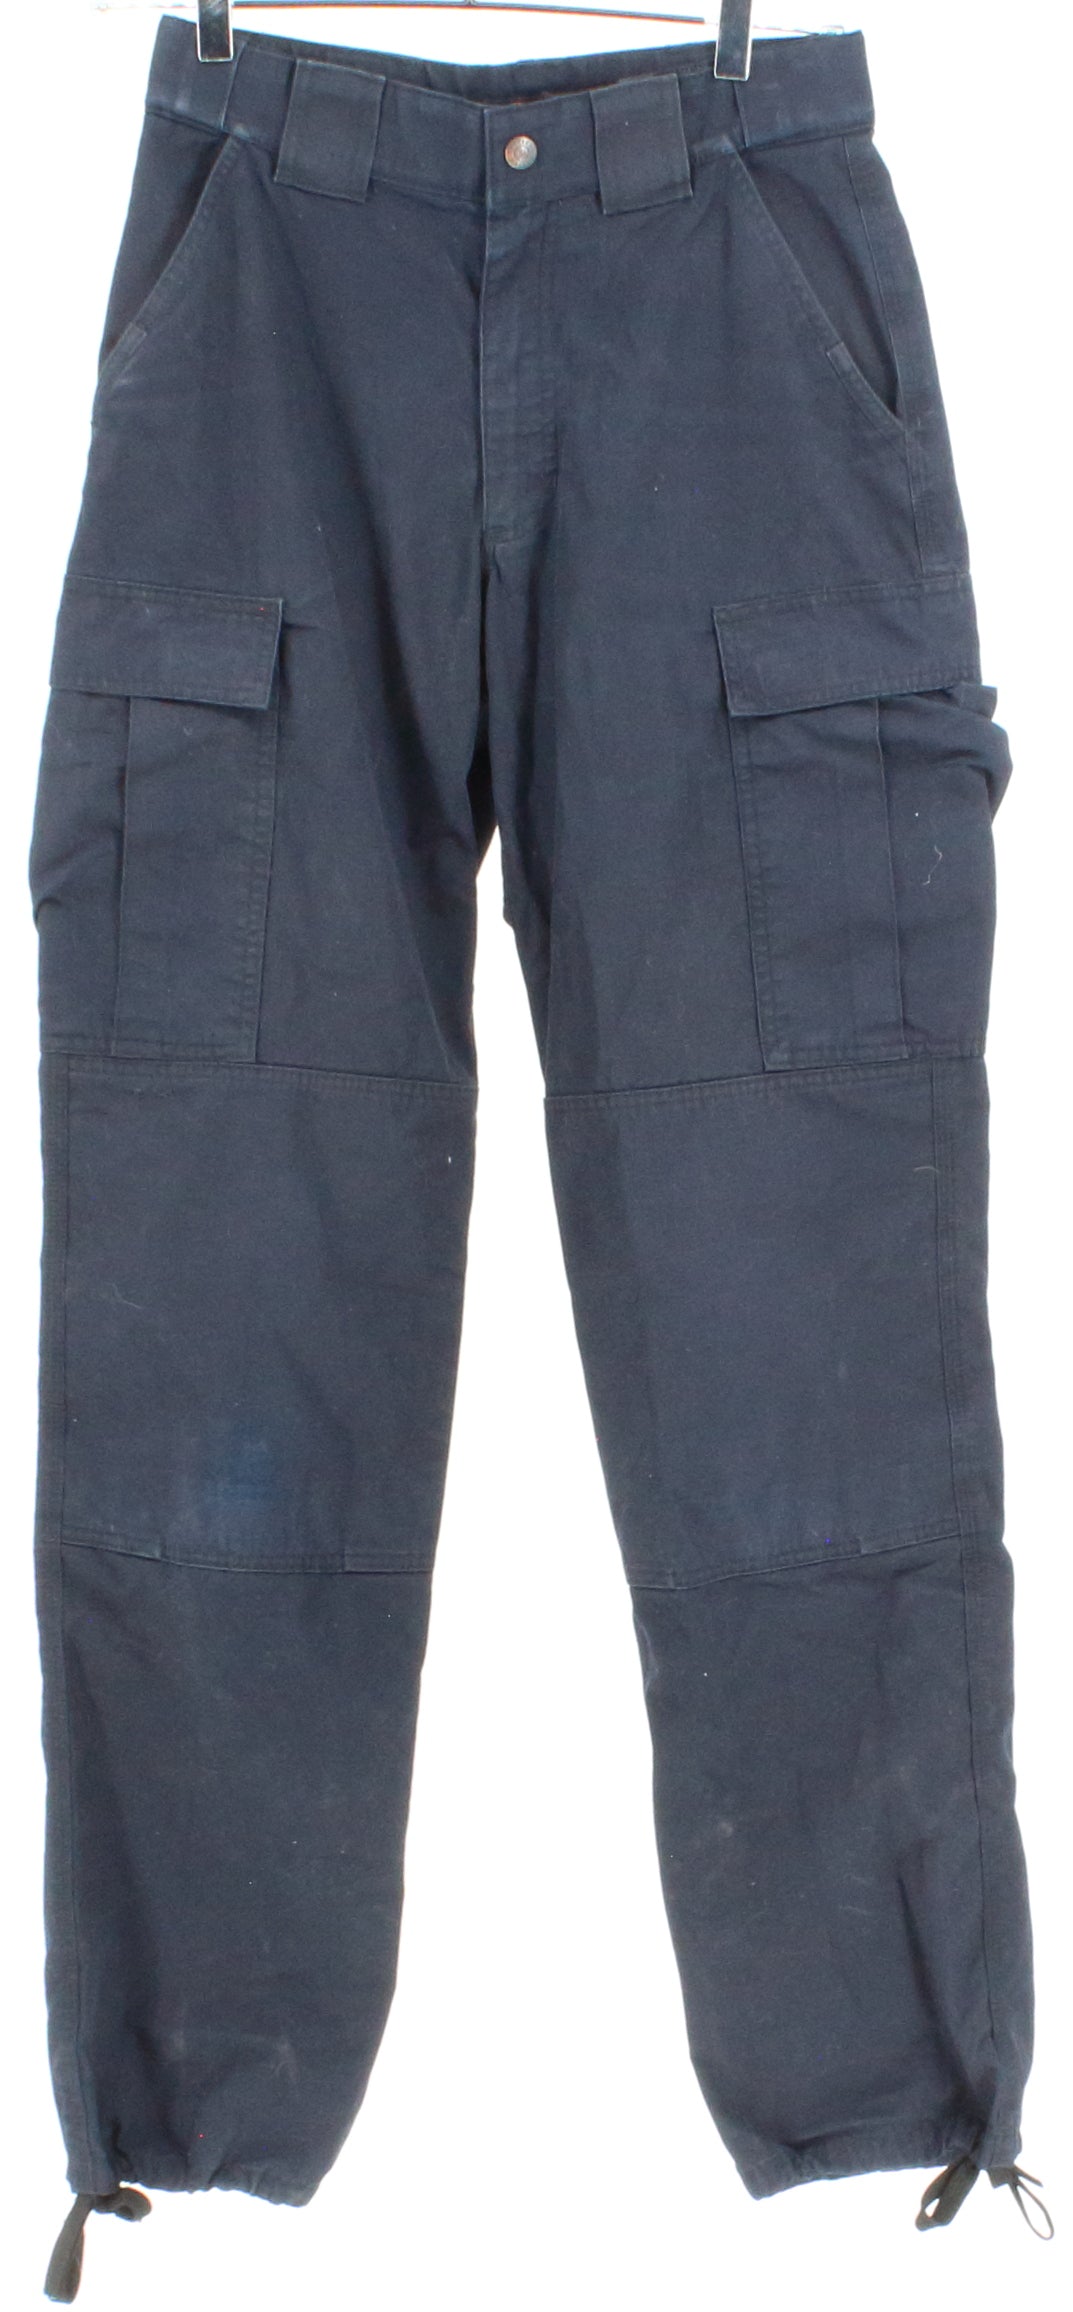 5.11 Tactical Series Navy Blue Cargo Pants